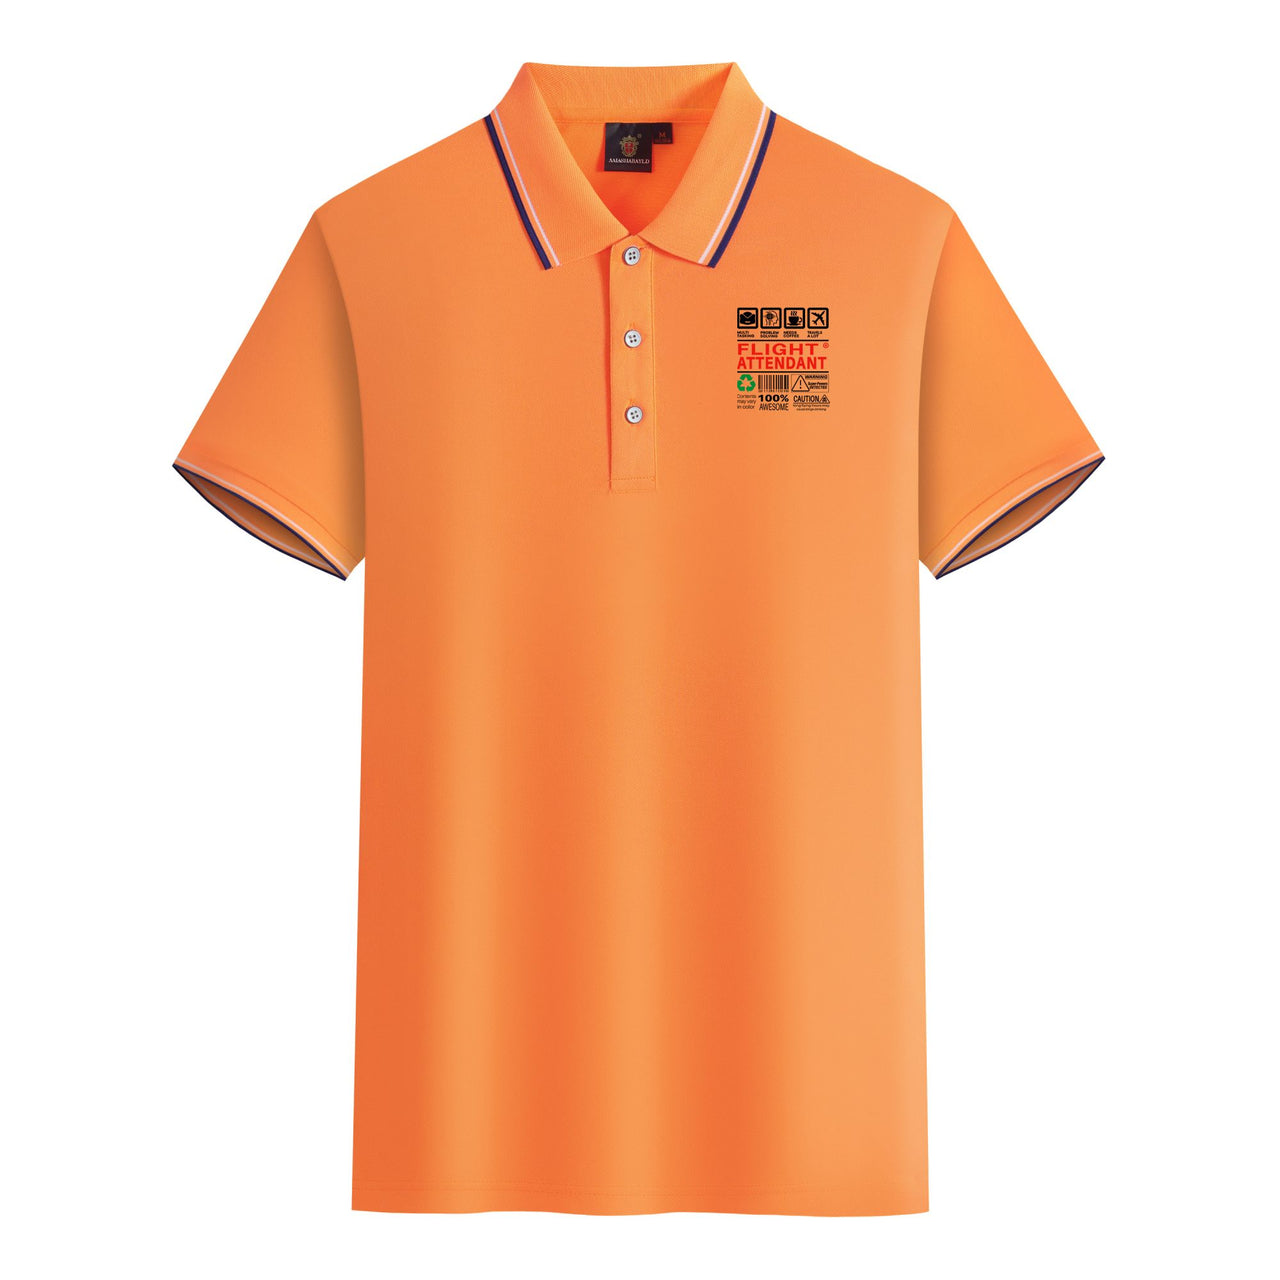 Flight Attendant Label Designed Stylish Polo T-Shirts